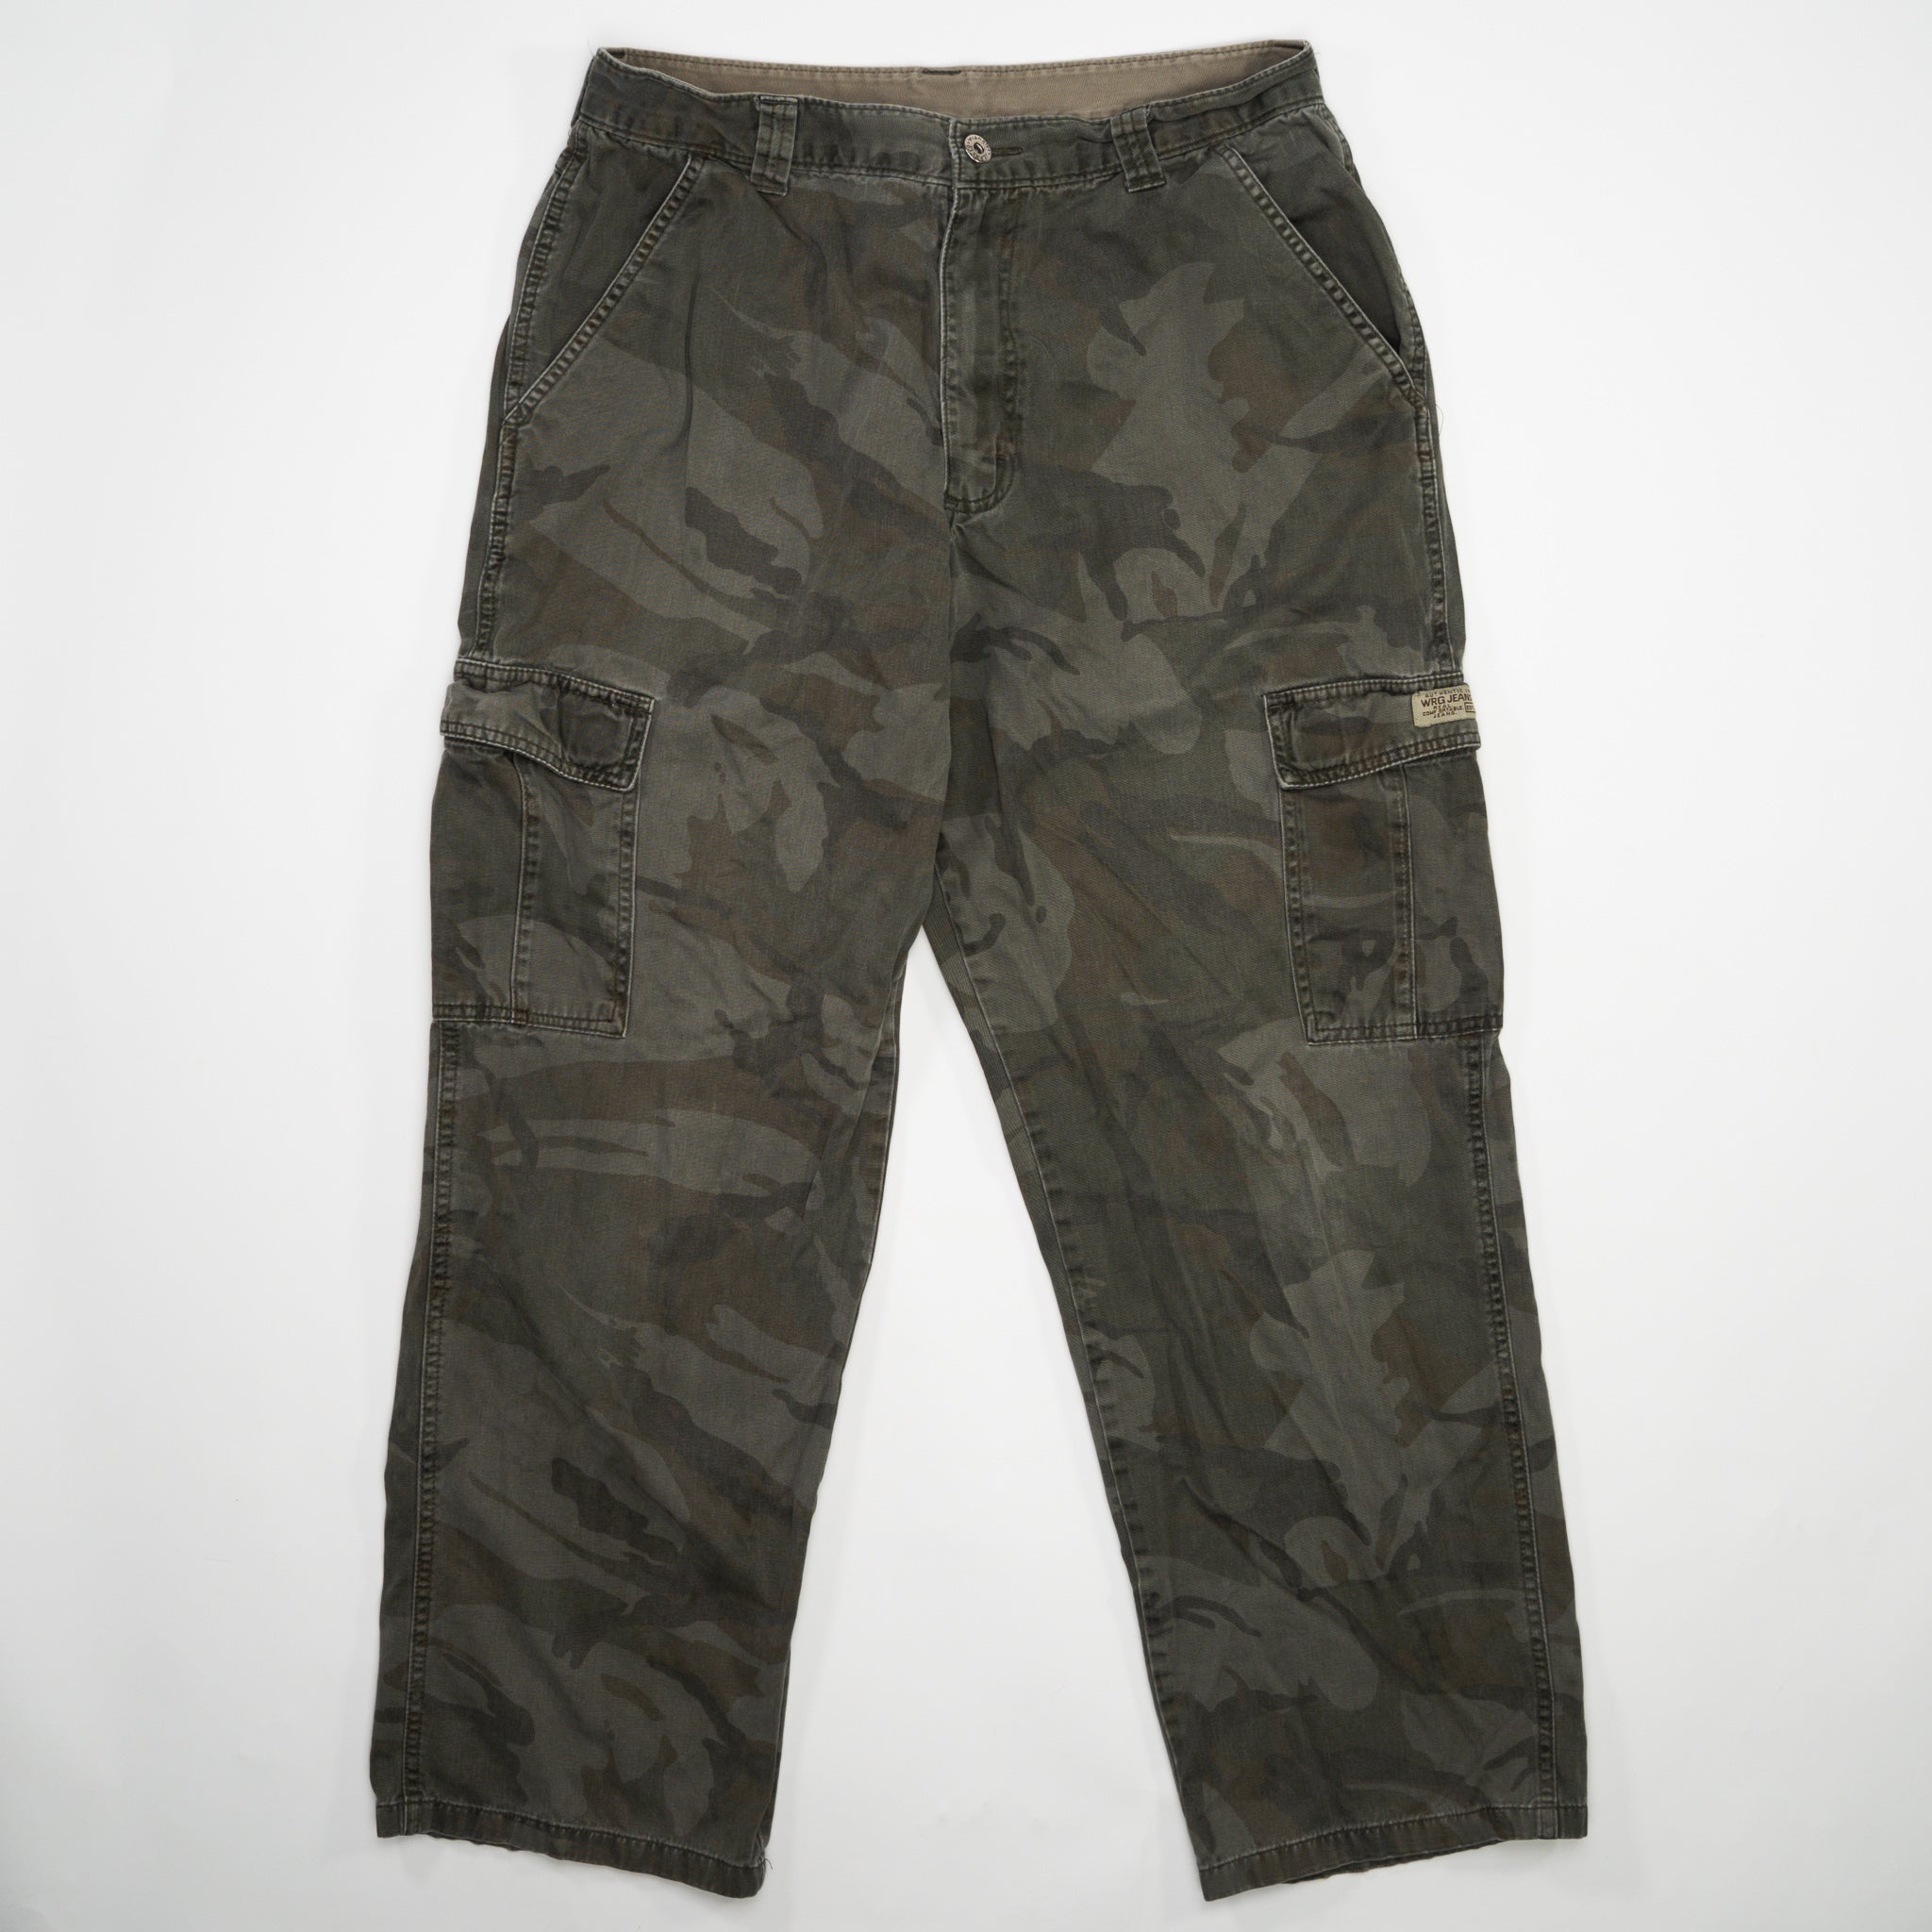 Vintage Wrangler Camouflage Army Cargo Pants (32 x 32) – Rebalance Vintage